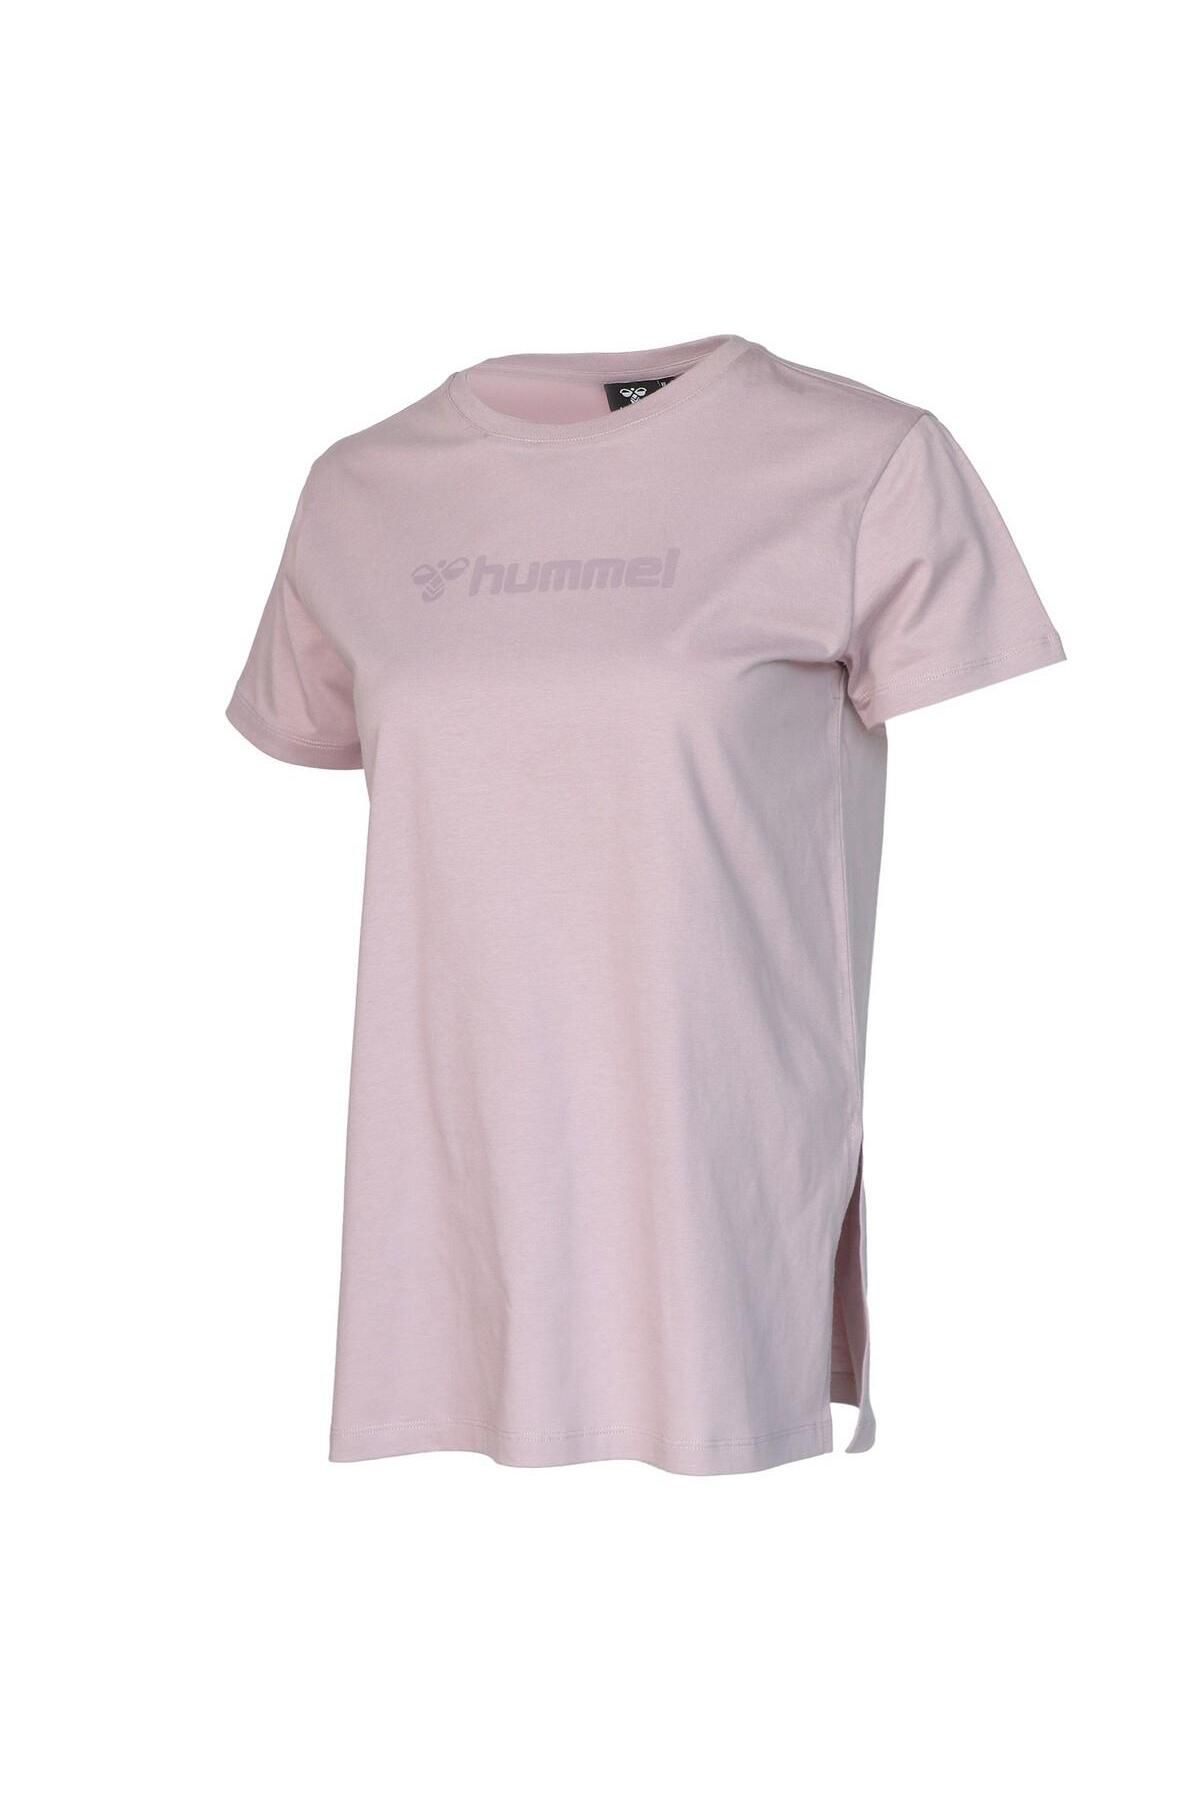 hummel 911698-2217 Reta Kadın T-shirt